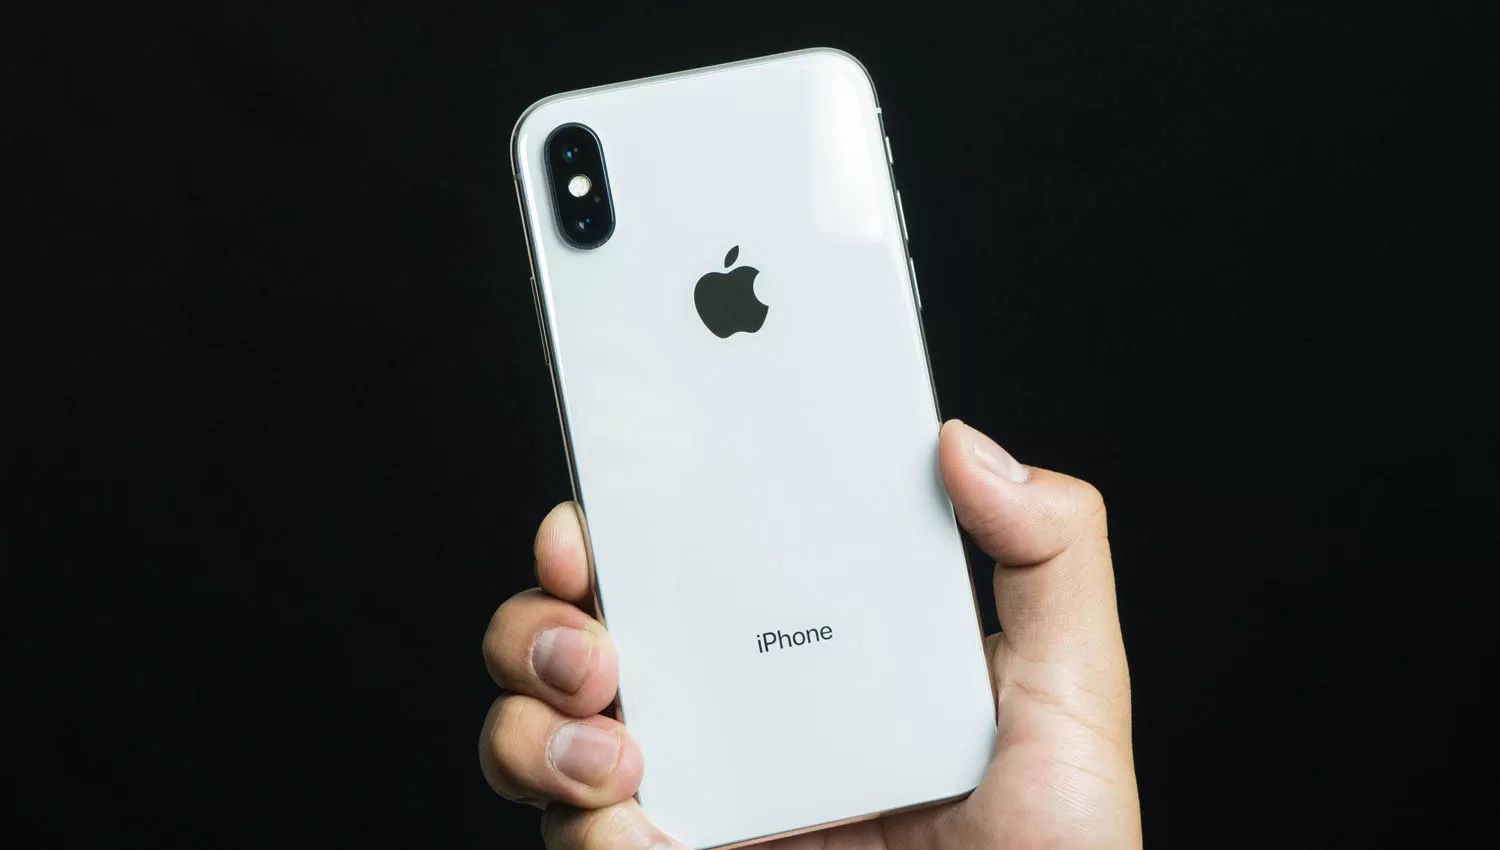 IPHONE X. El último aparato de Apple. FOTO TOMADA DE CNET.COM.